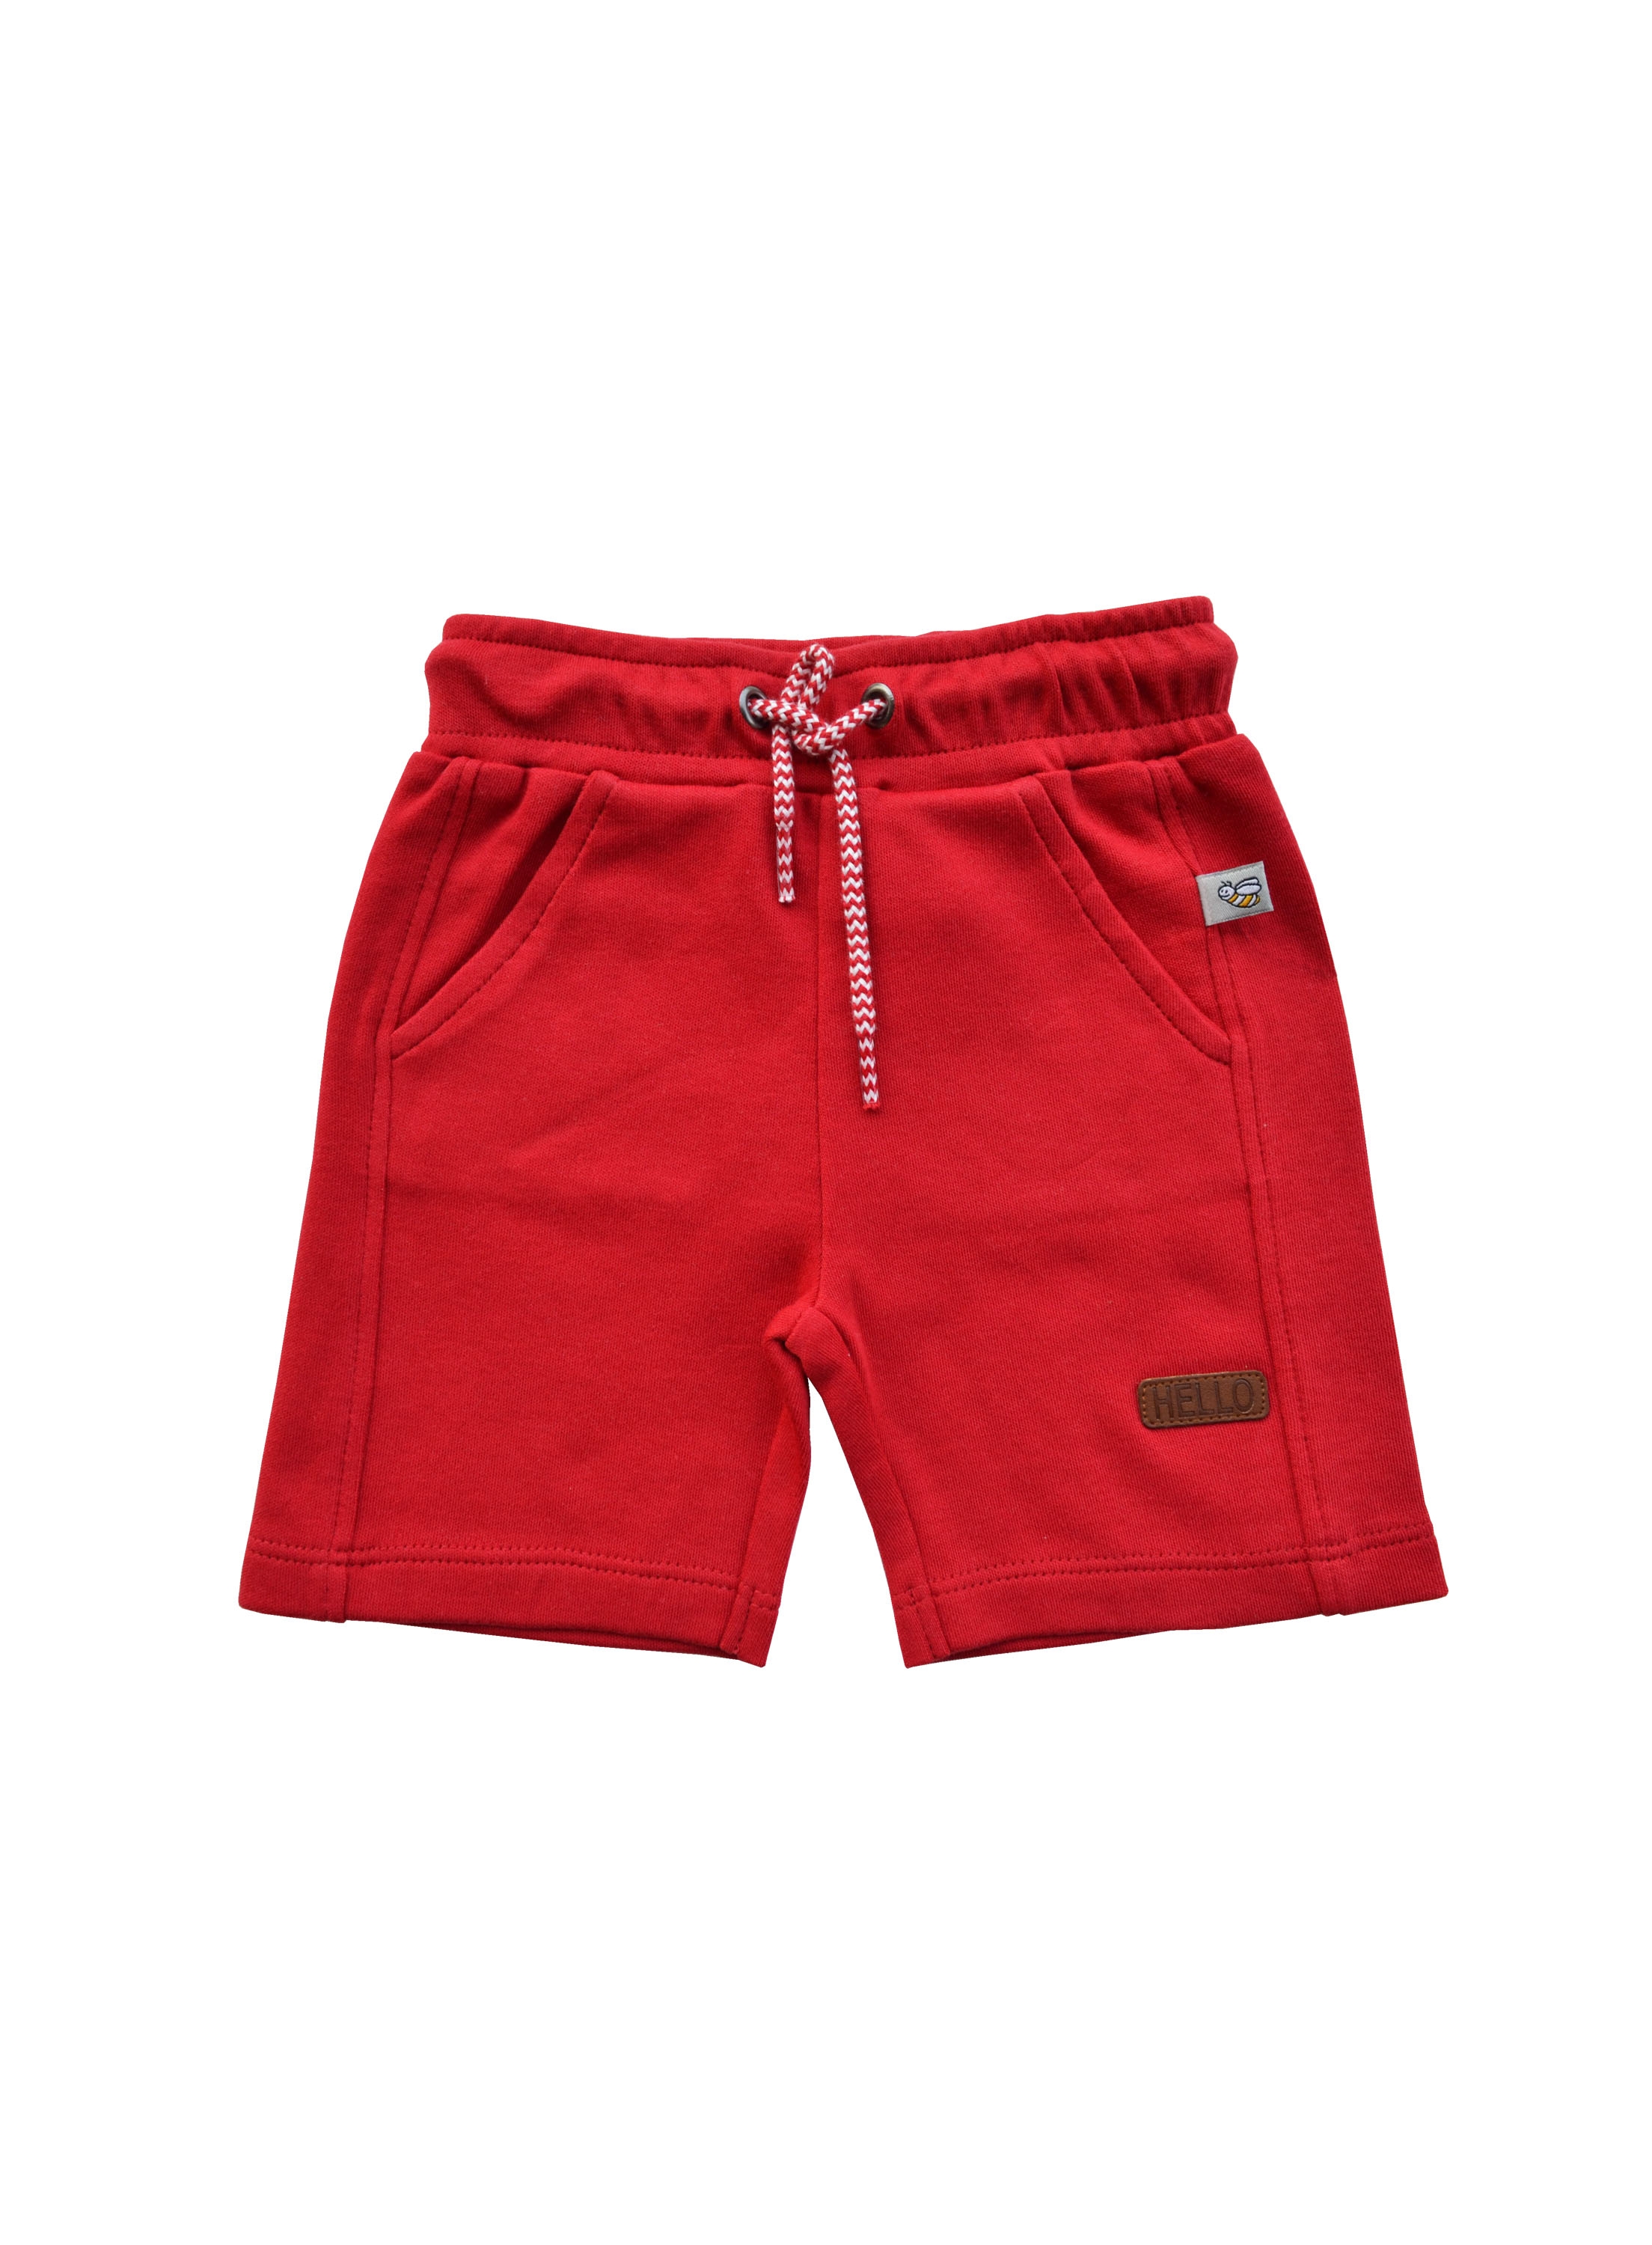 Red Shorts (100% Cotton Interlock Biowash)